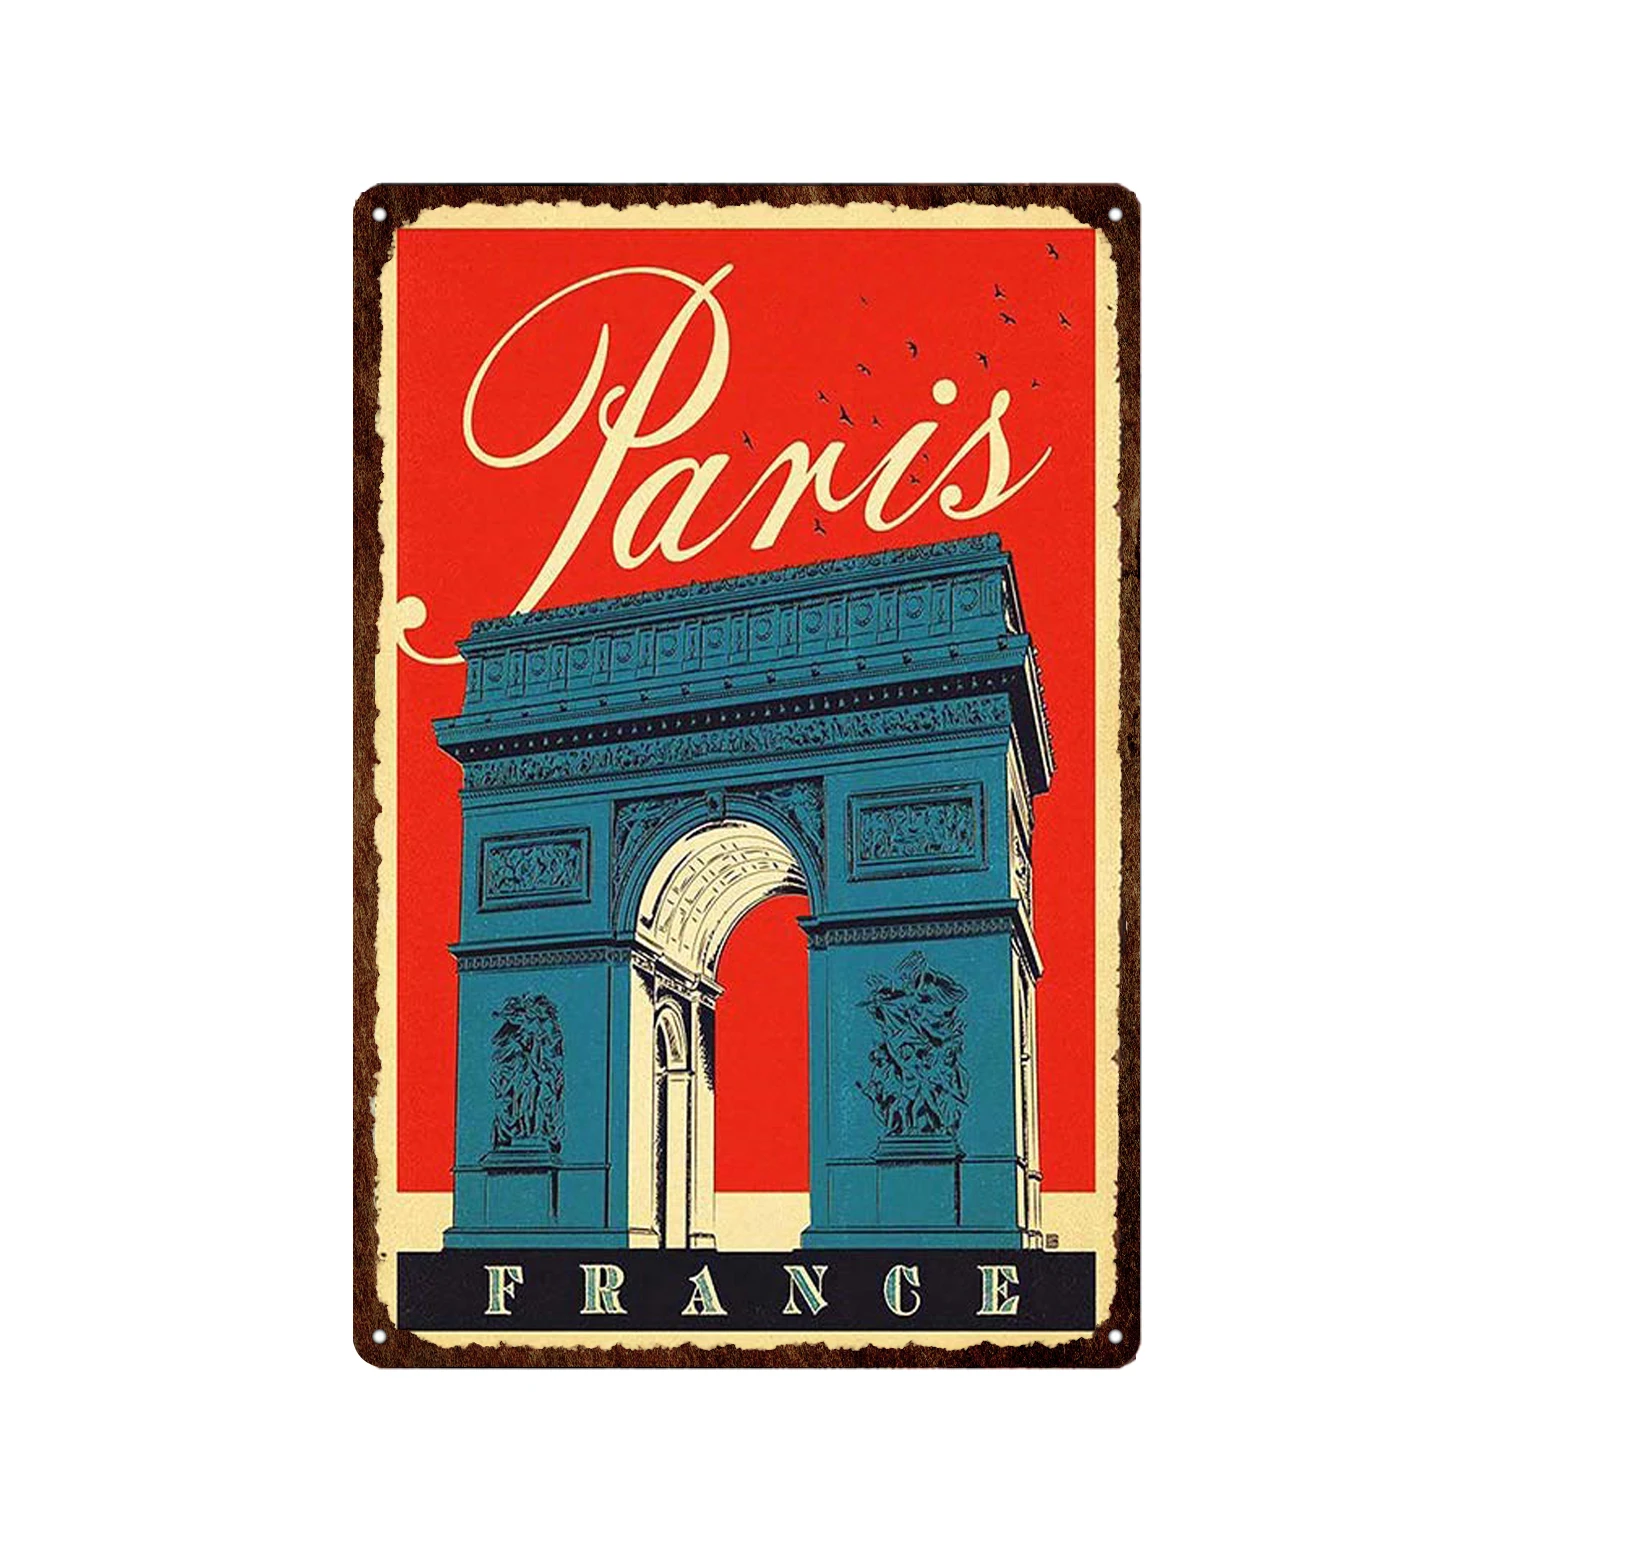 Den Verdensberømte By Turisme Rom, Paris, London Klassiske Arkitektur Retro Tilpasses Dekorative Metal Plak Tin Maling Tin Tegn